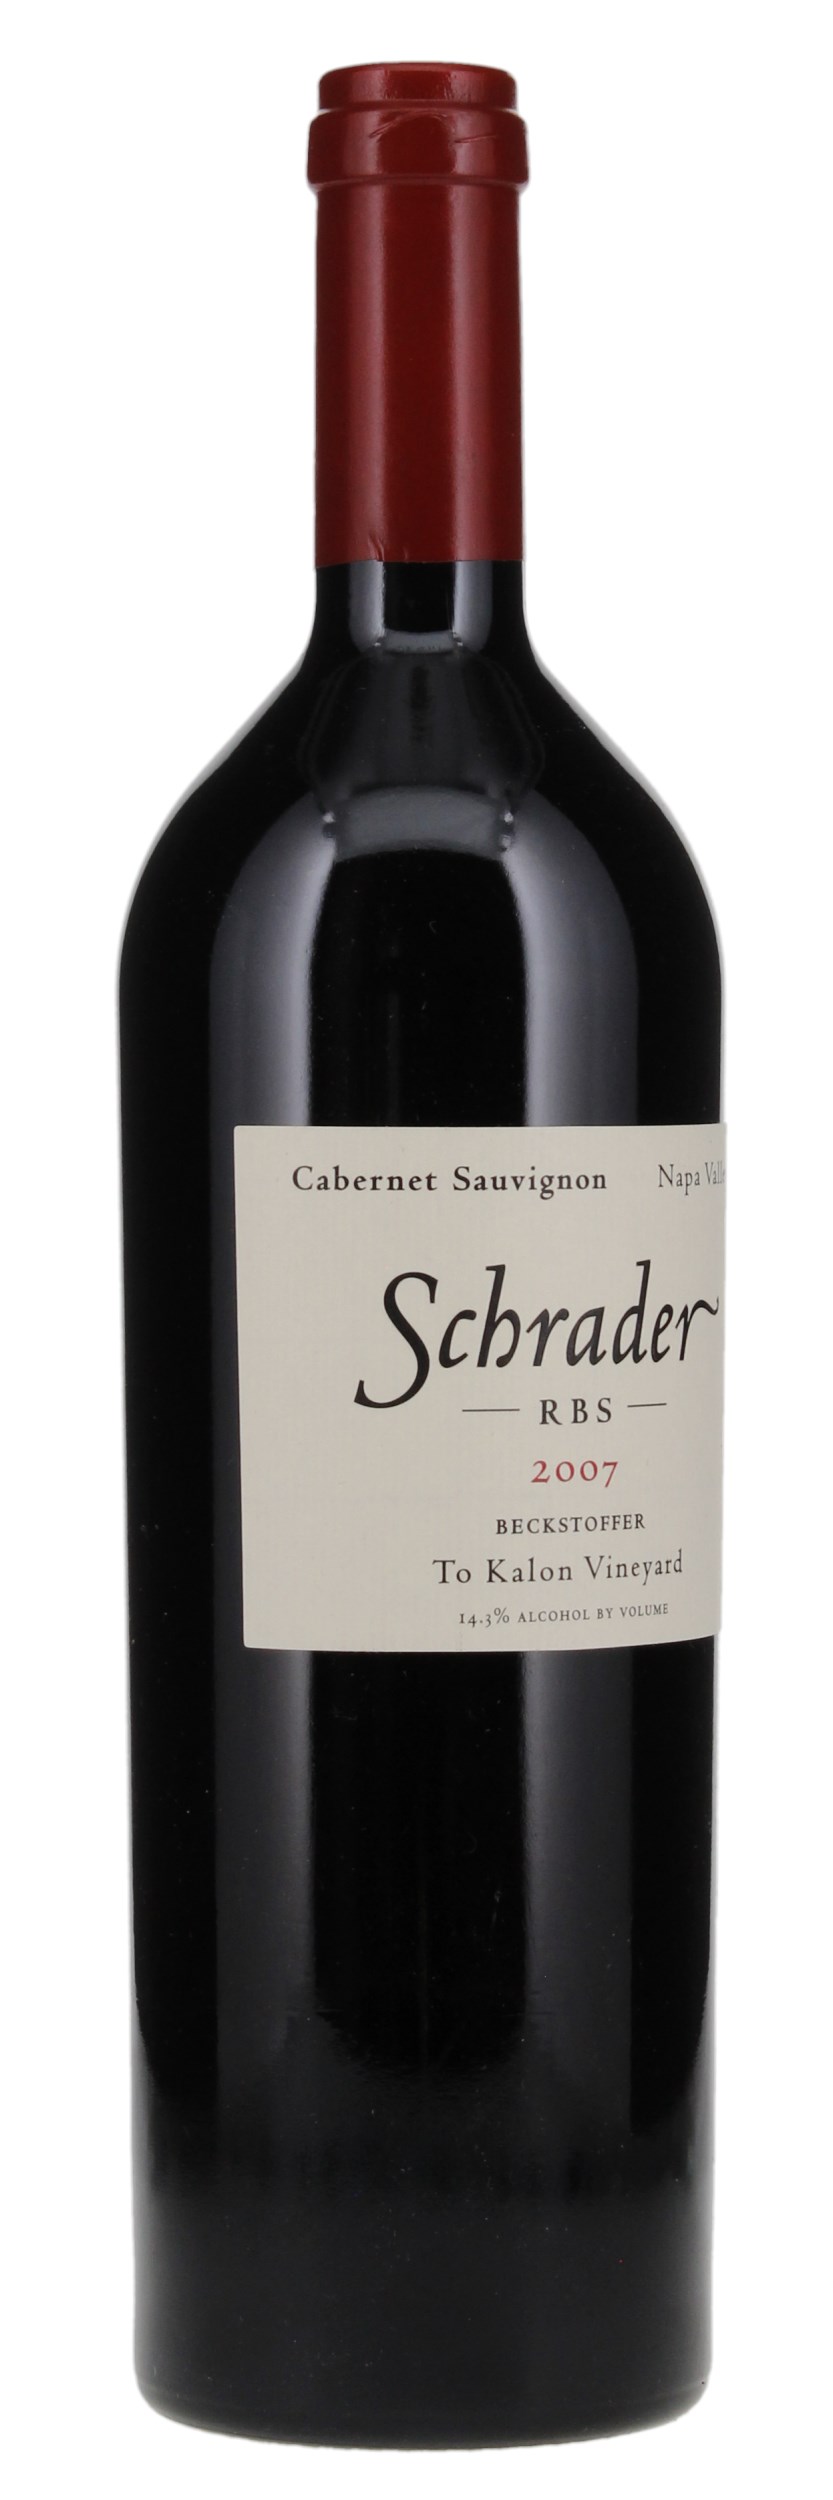 2007 Schrader RBS Beckstoffer To Kalon Vineyard Cabernet Sauvignon, 750ml